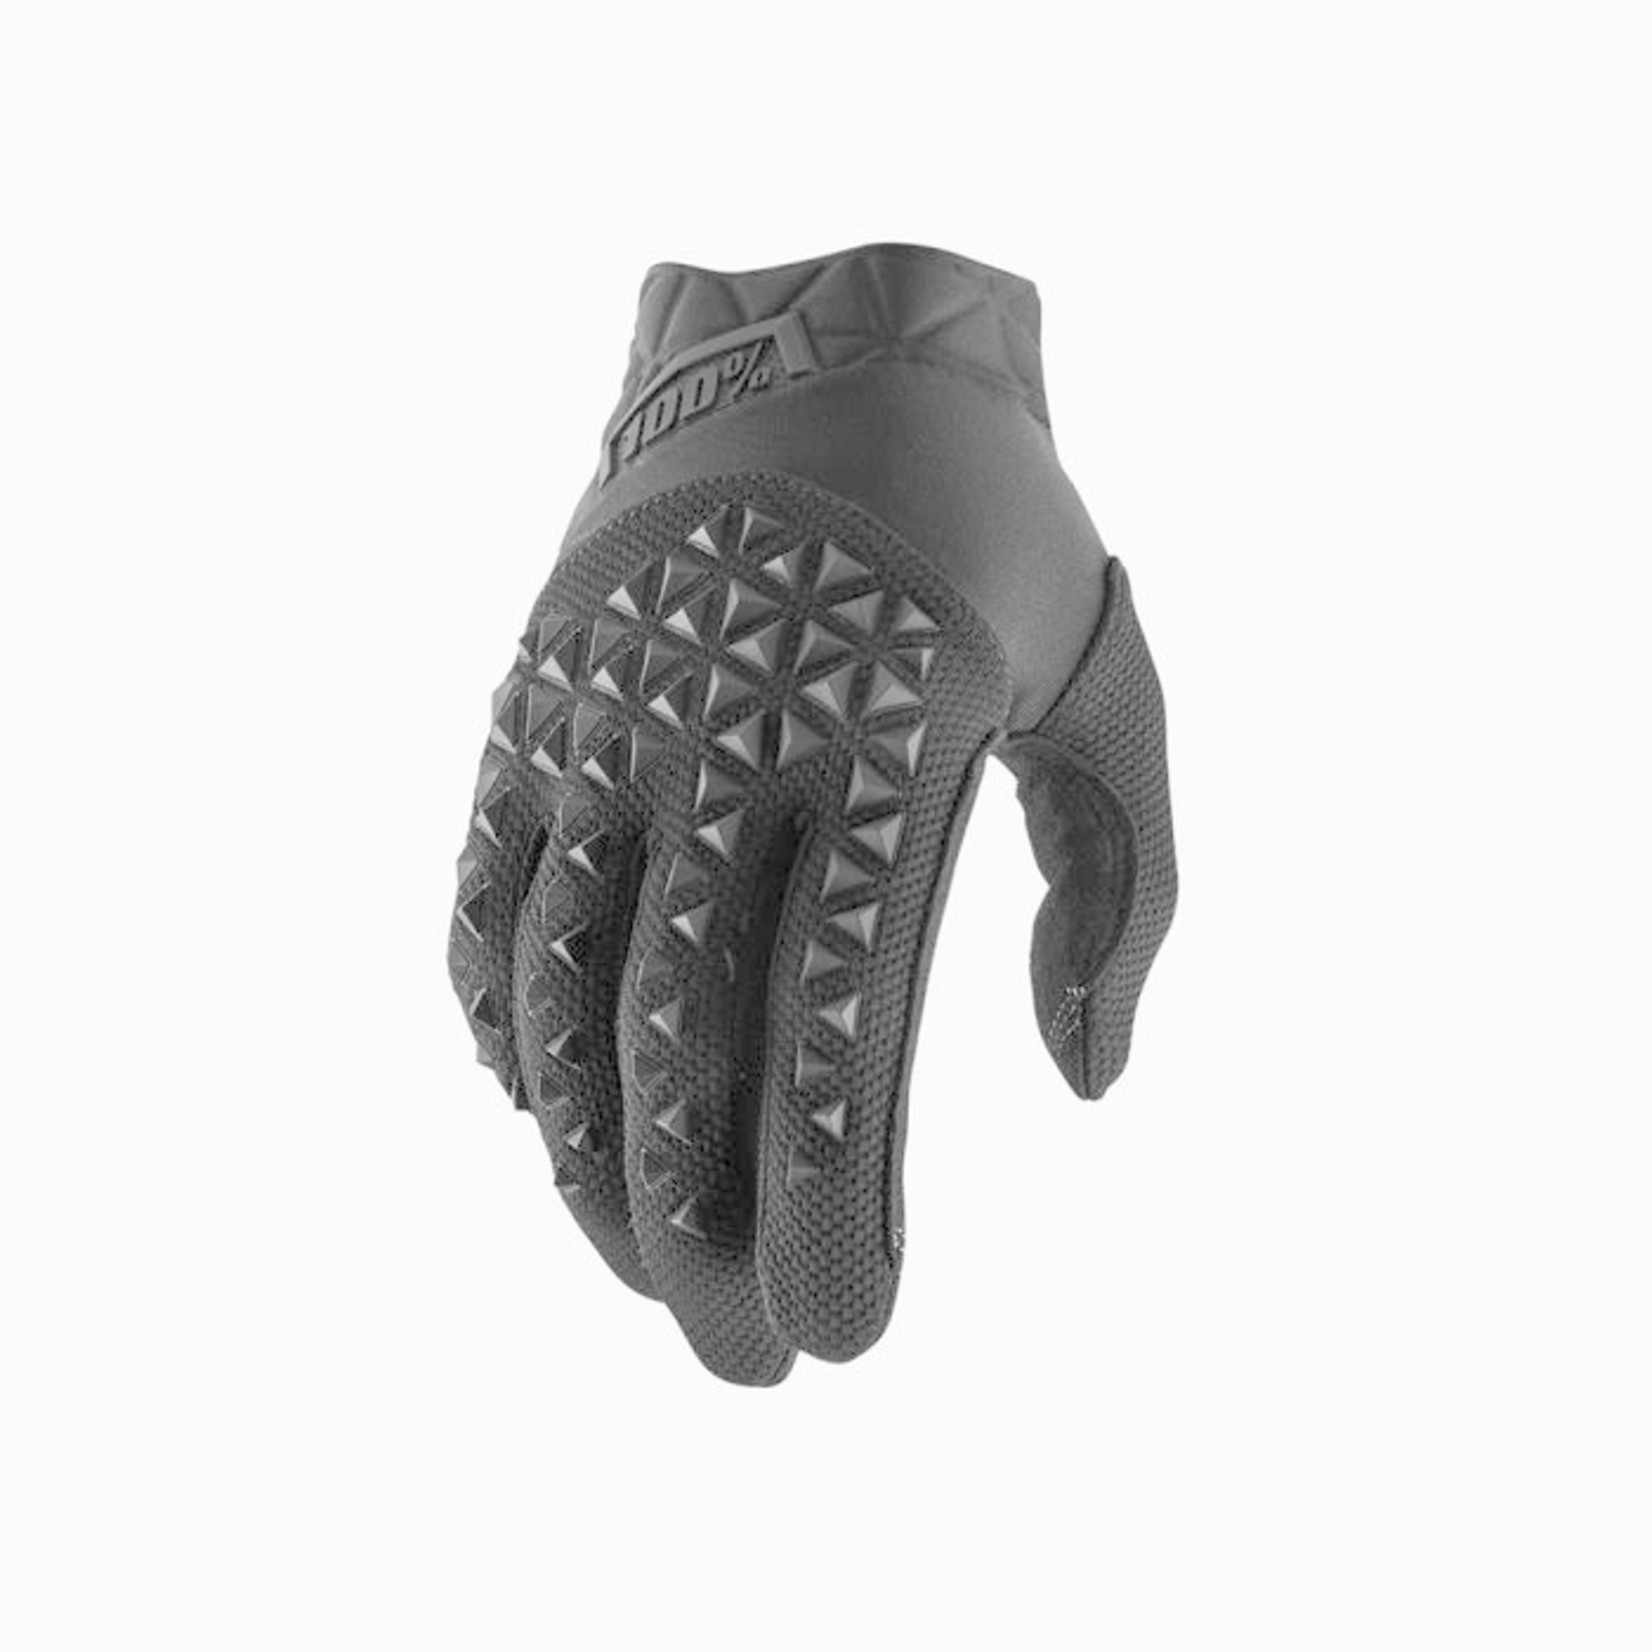 100 Percent 100% Airmatic Bike/Cycling Glove - Black/Charcoal Material Mesh